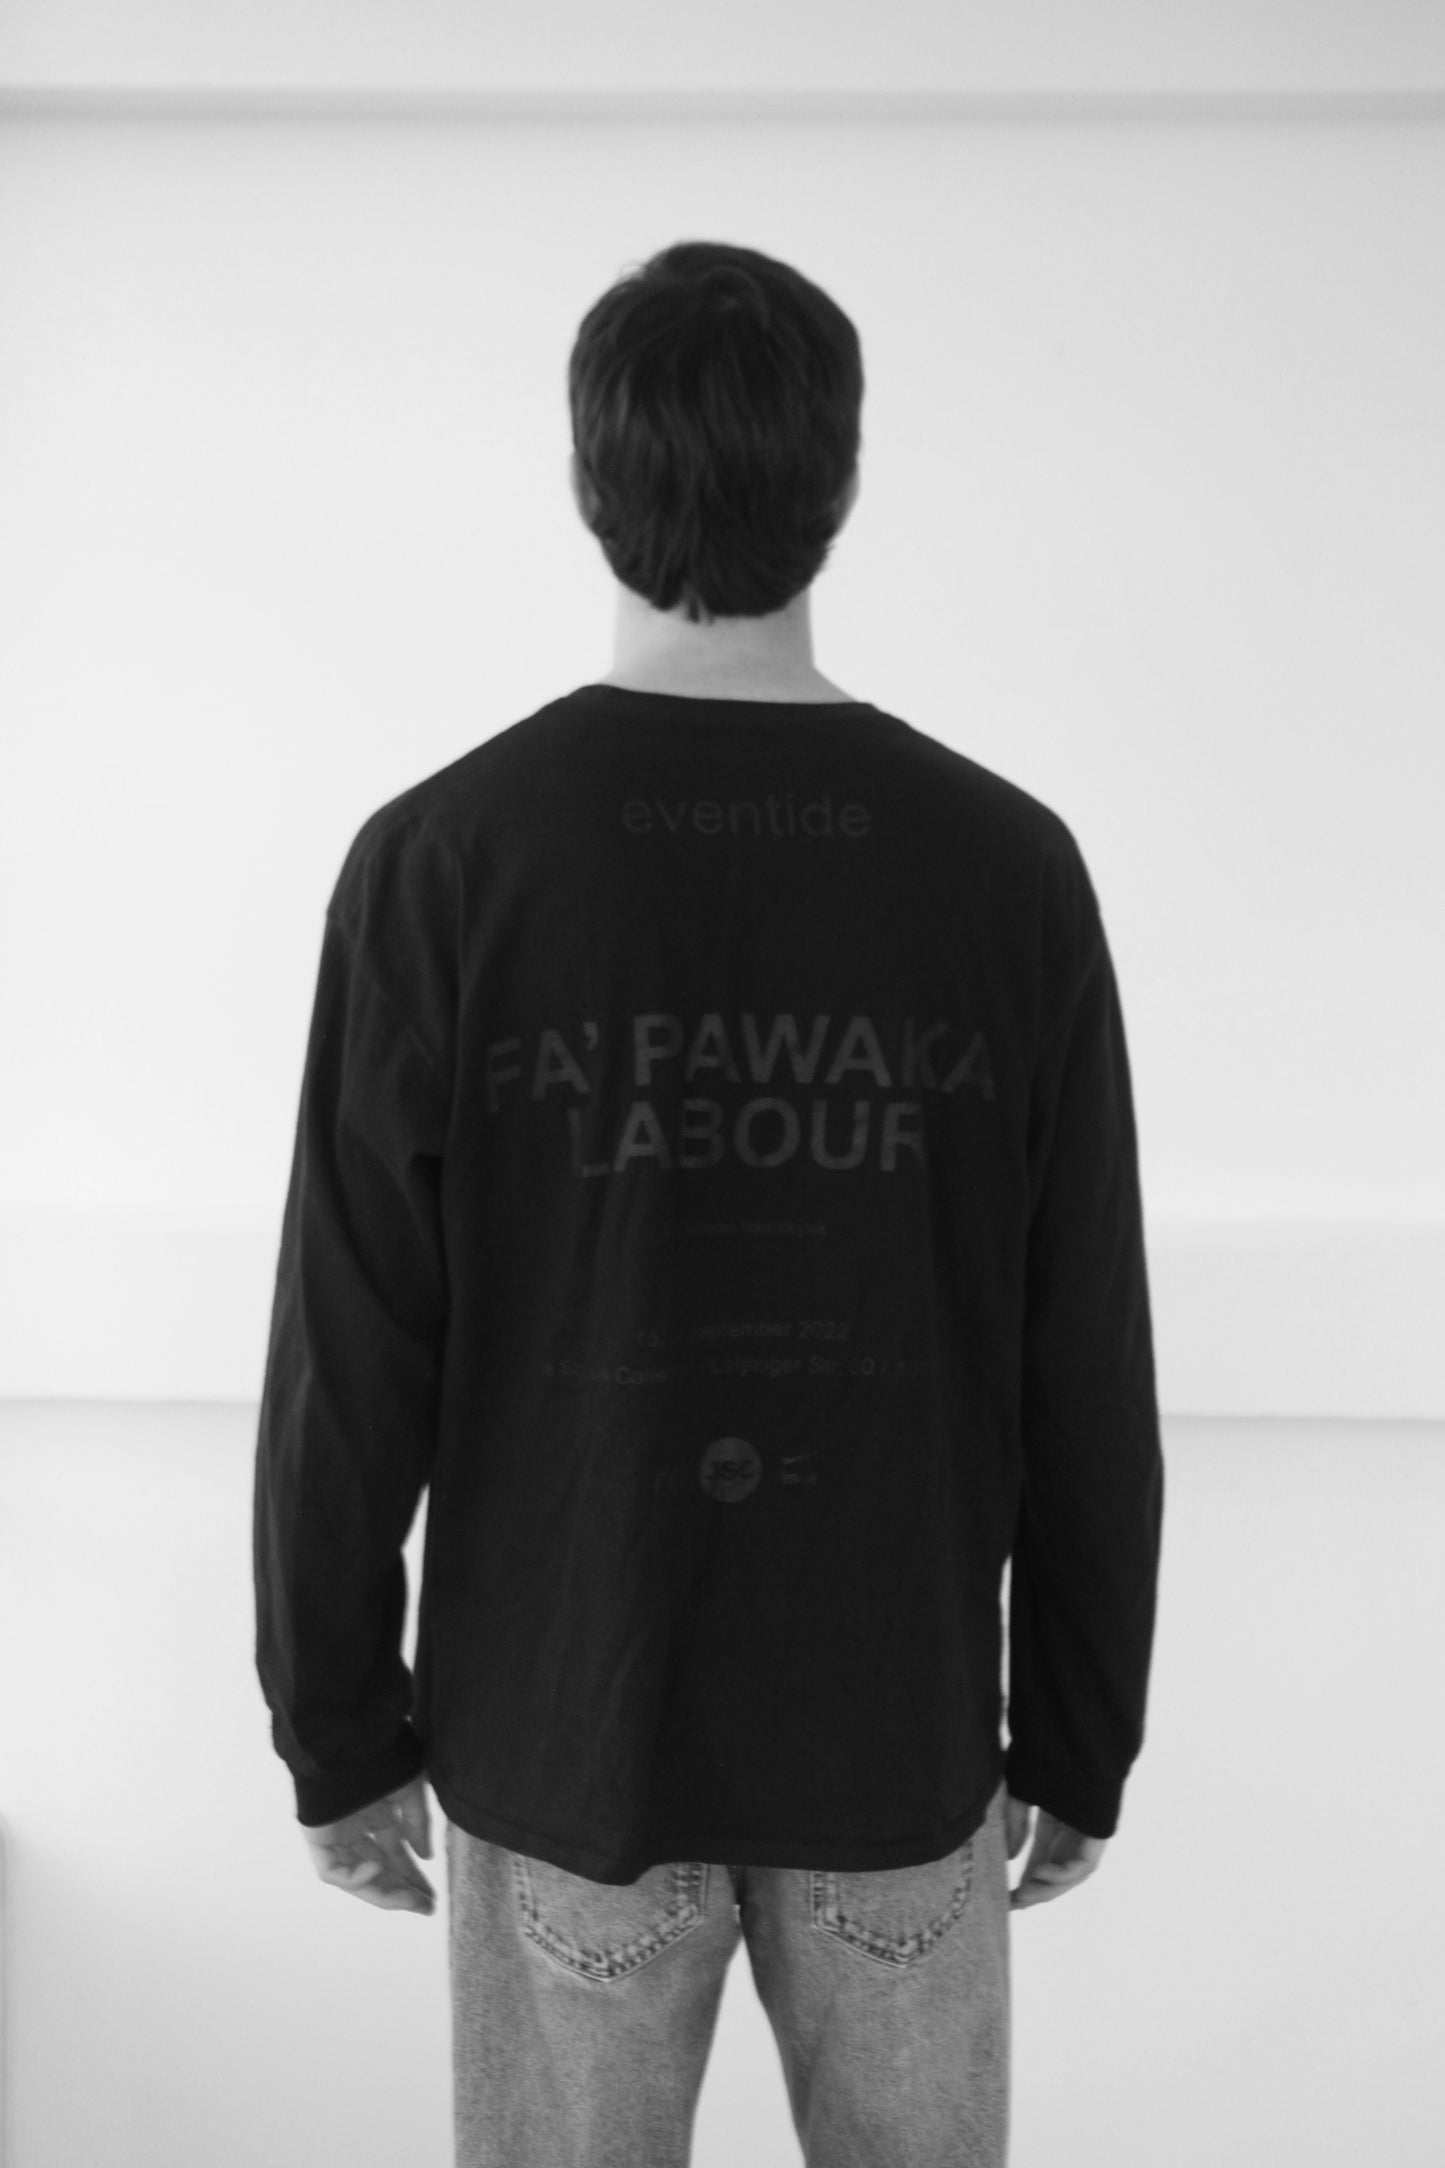 Fa Pawaka, LABOUR - Eventide - Black Long-Sleeve XL